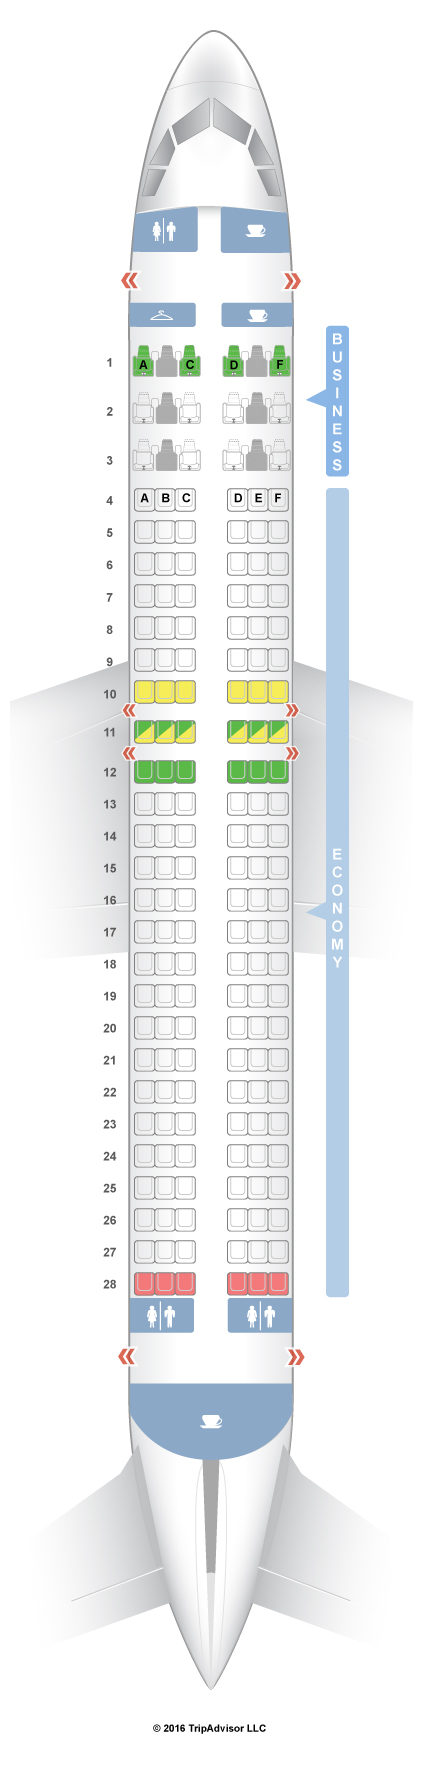 Seatguru Seat Map Brussels Airlines Airbus A320 320 V1